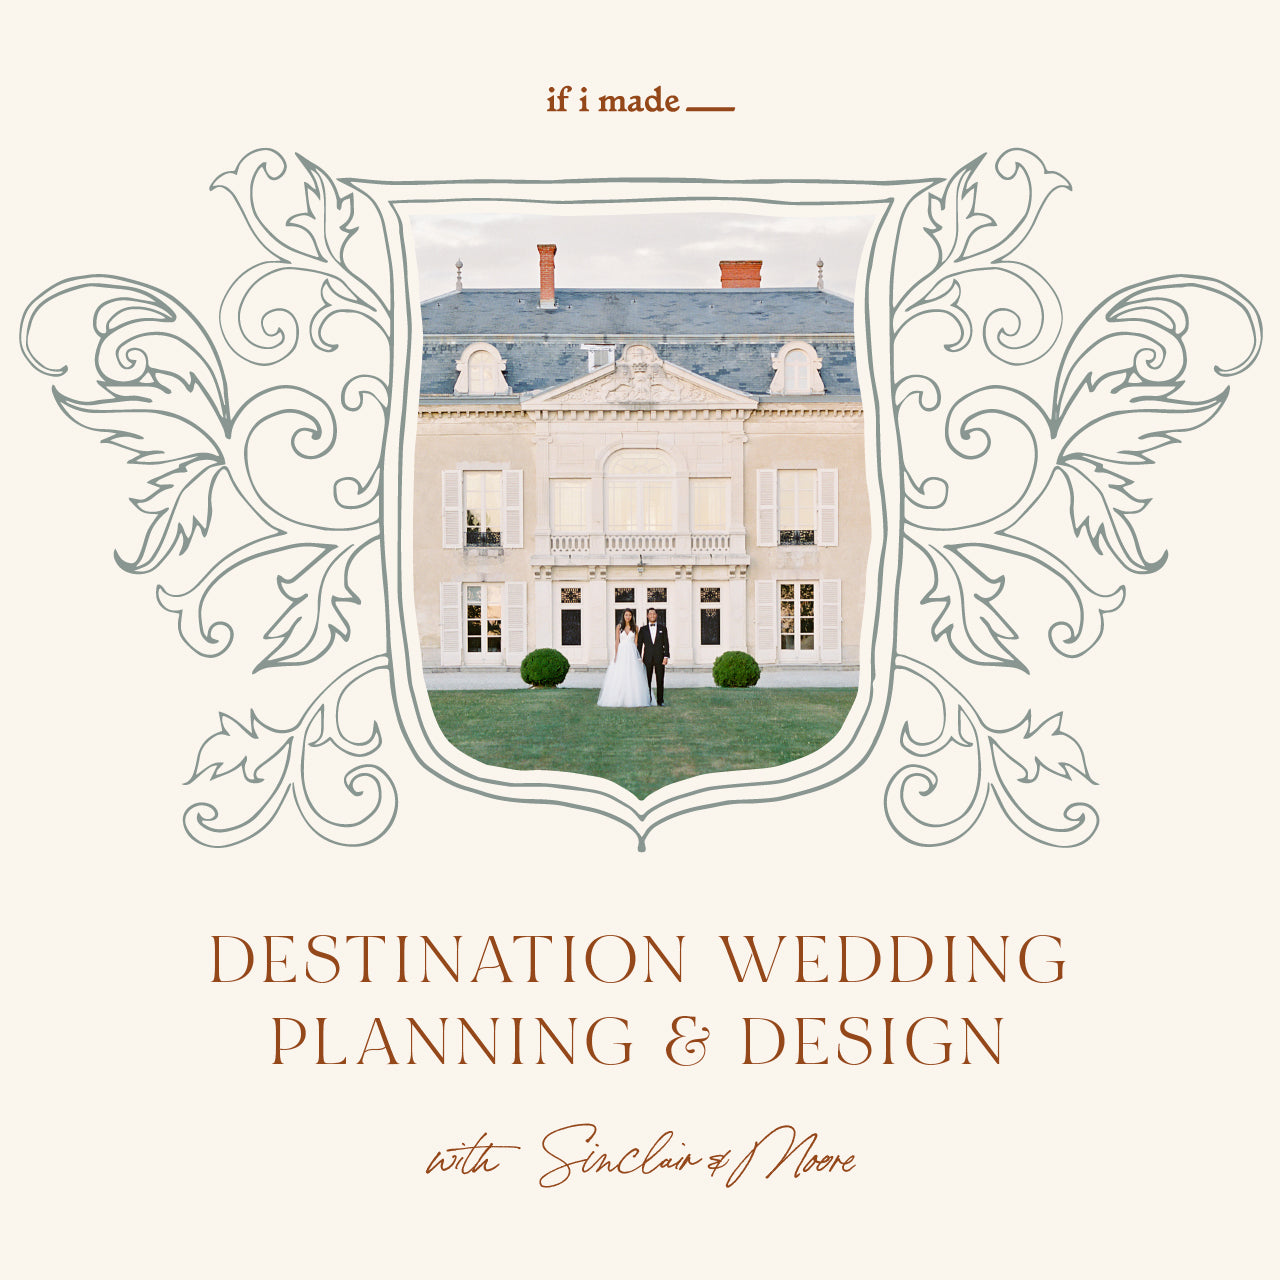 Destination Wedding Planning & Design with Sinclair & Moore (ROP)